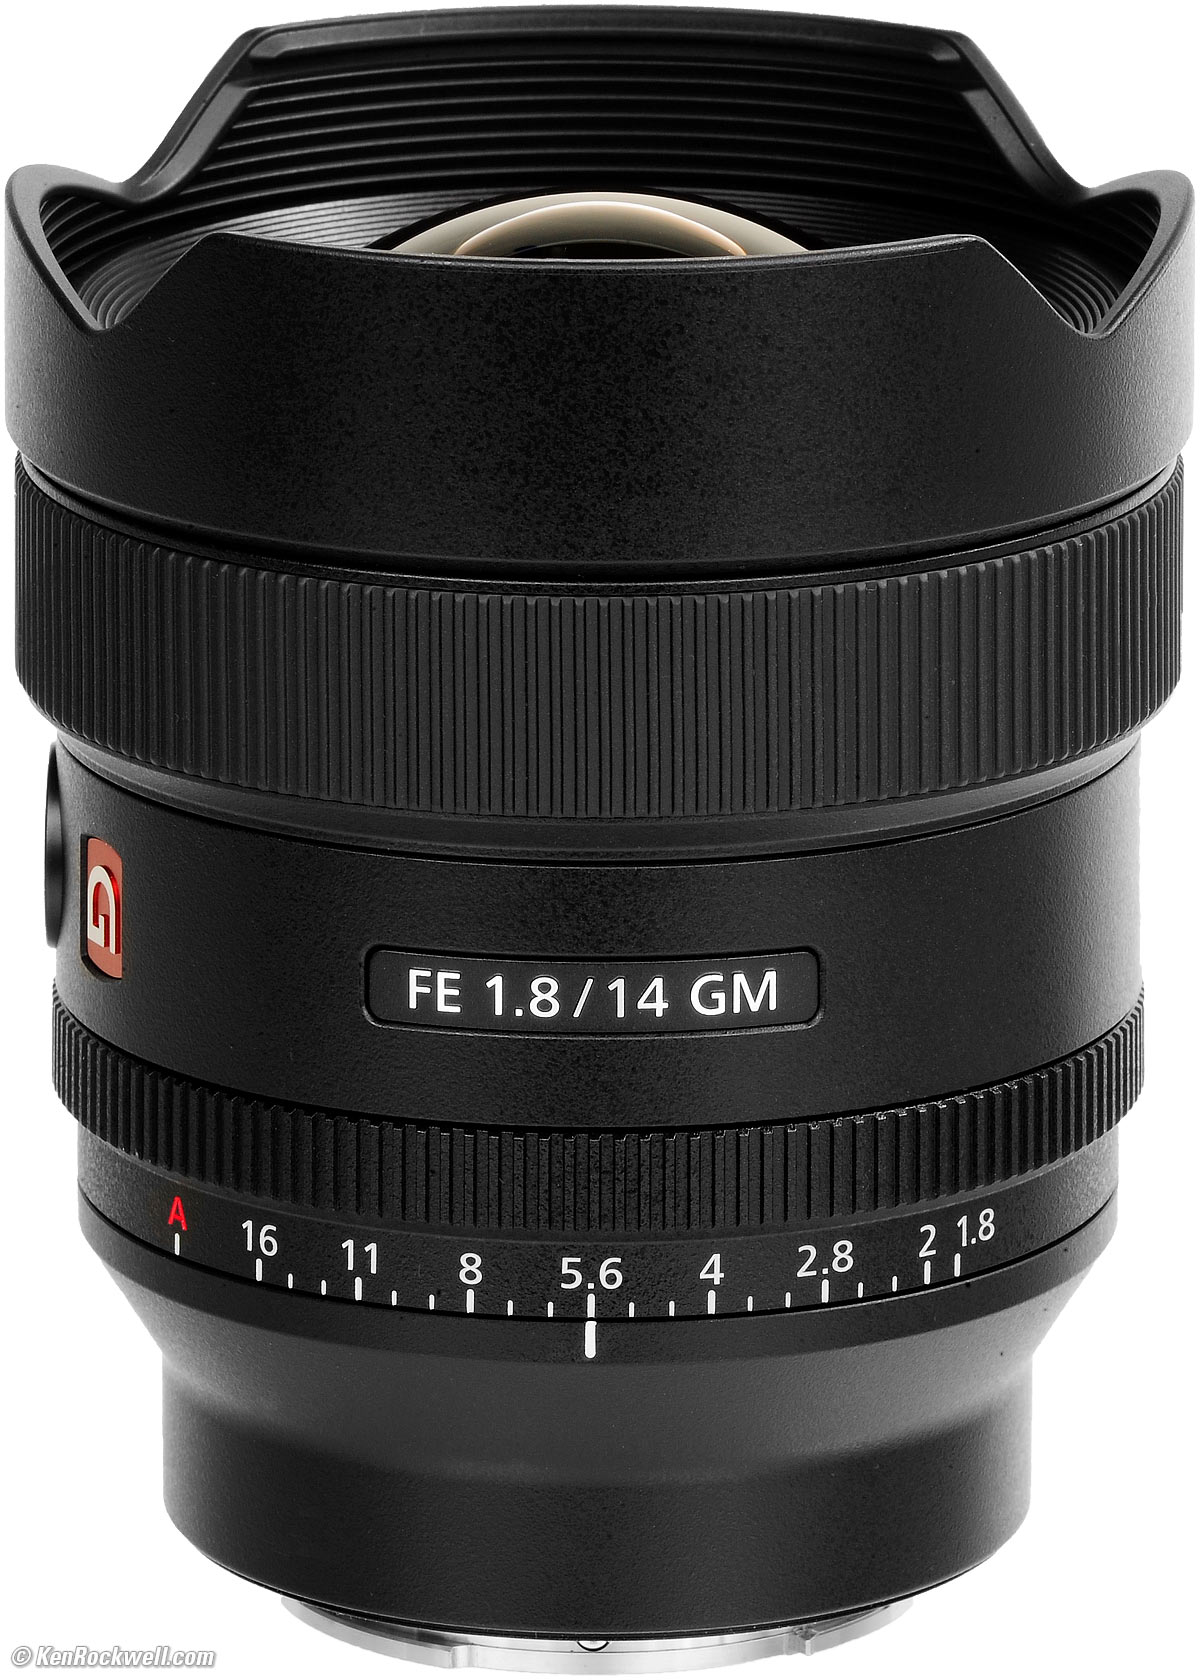 Size Comparison of FE 135mm f/1.8 GM w/ Sigma FE 135mm f/1.8, FE 24mm f/1.4  GM, FE 85mm f/1.4 GM Lenses